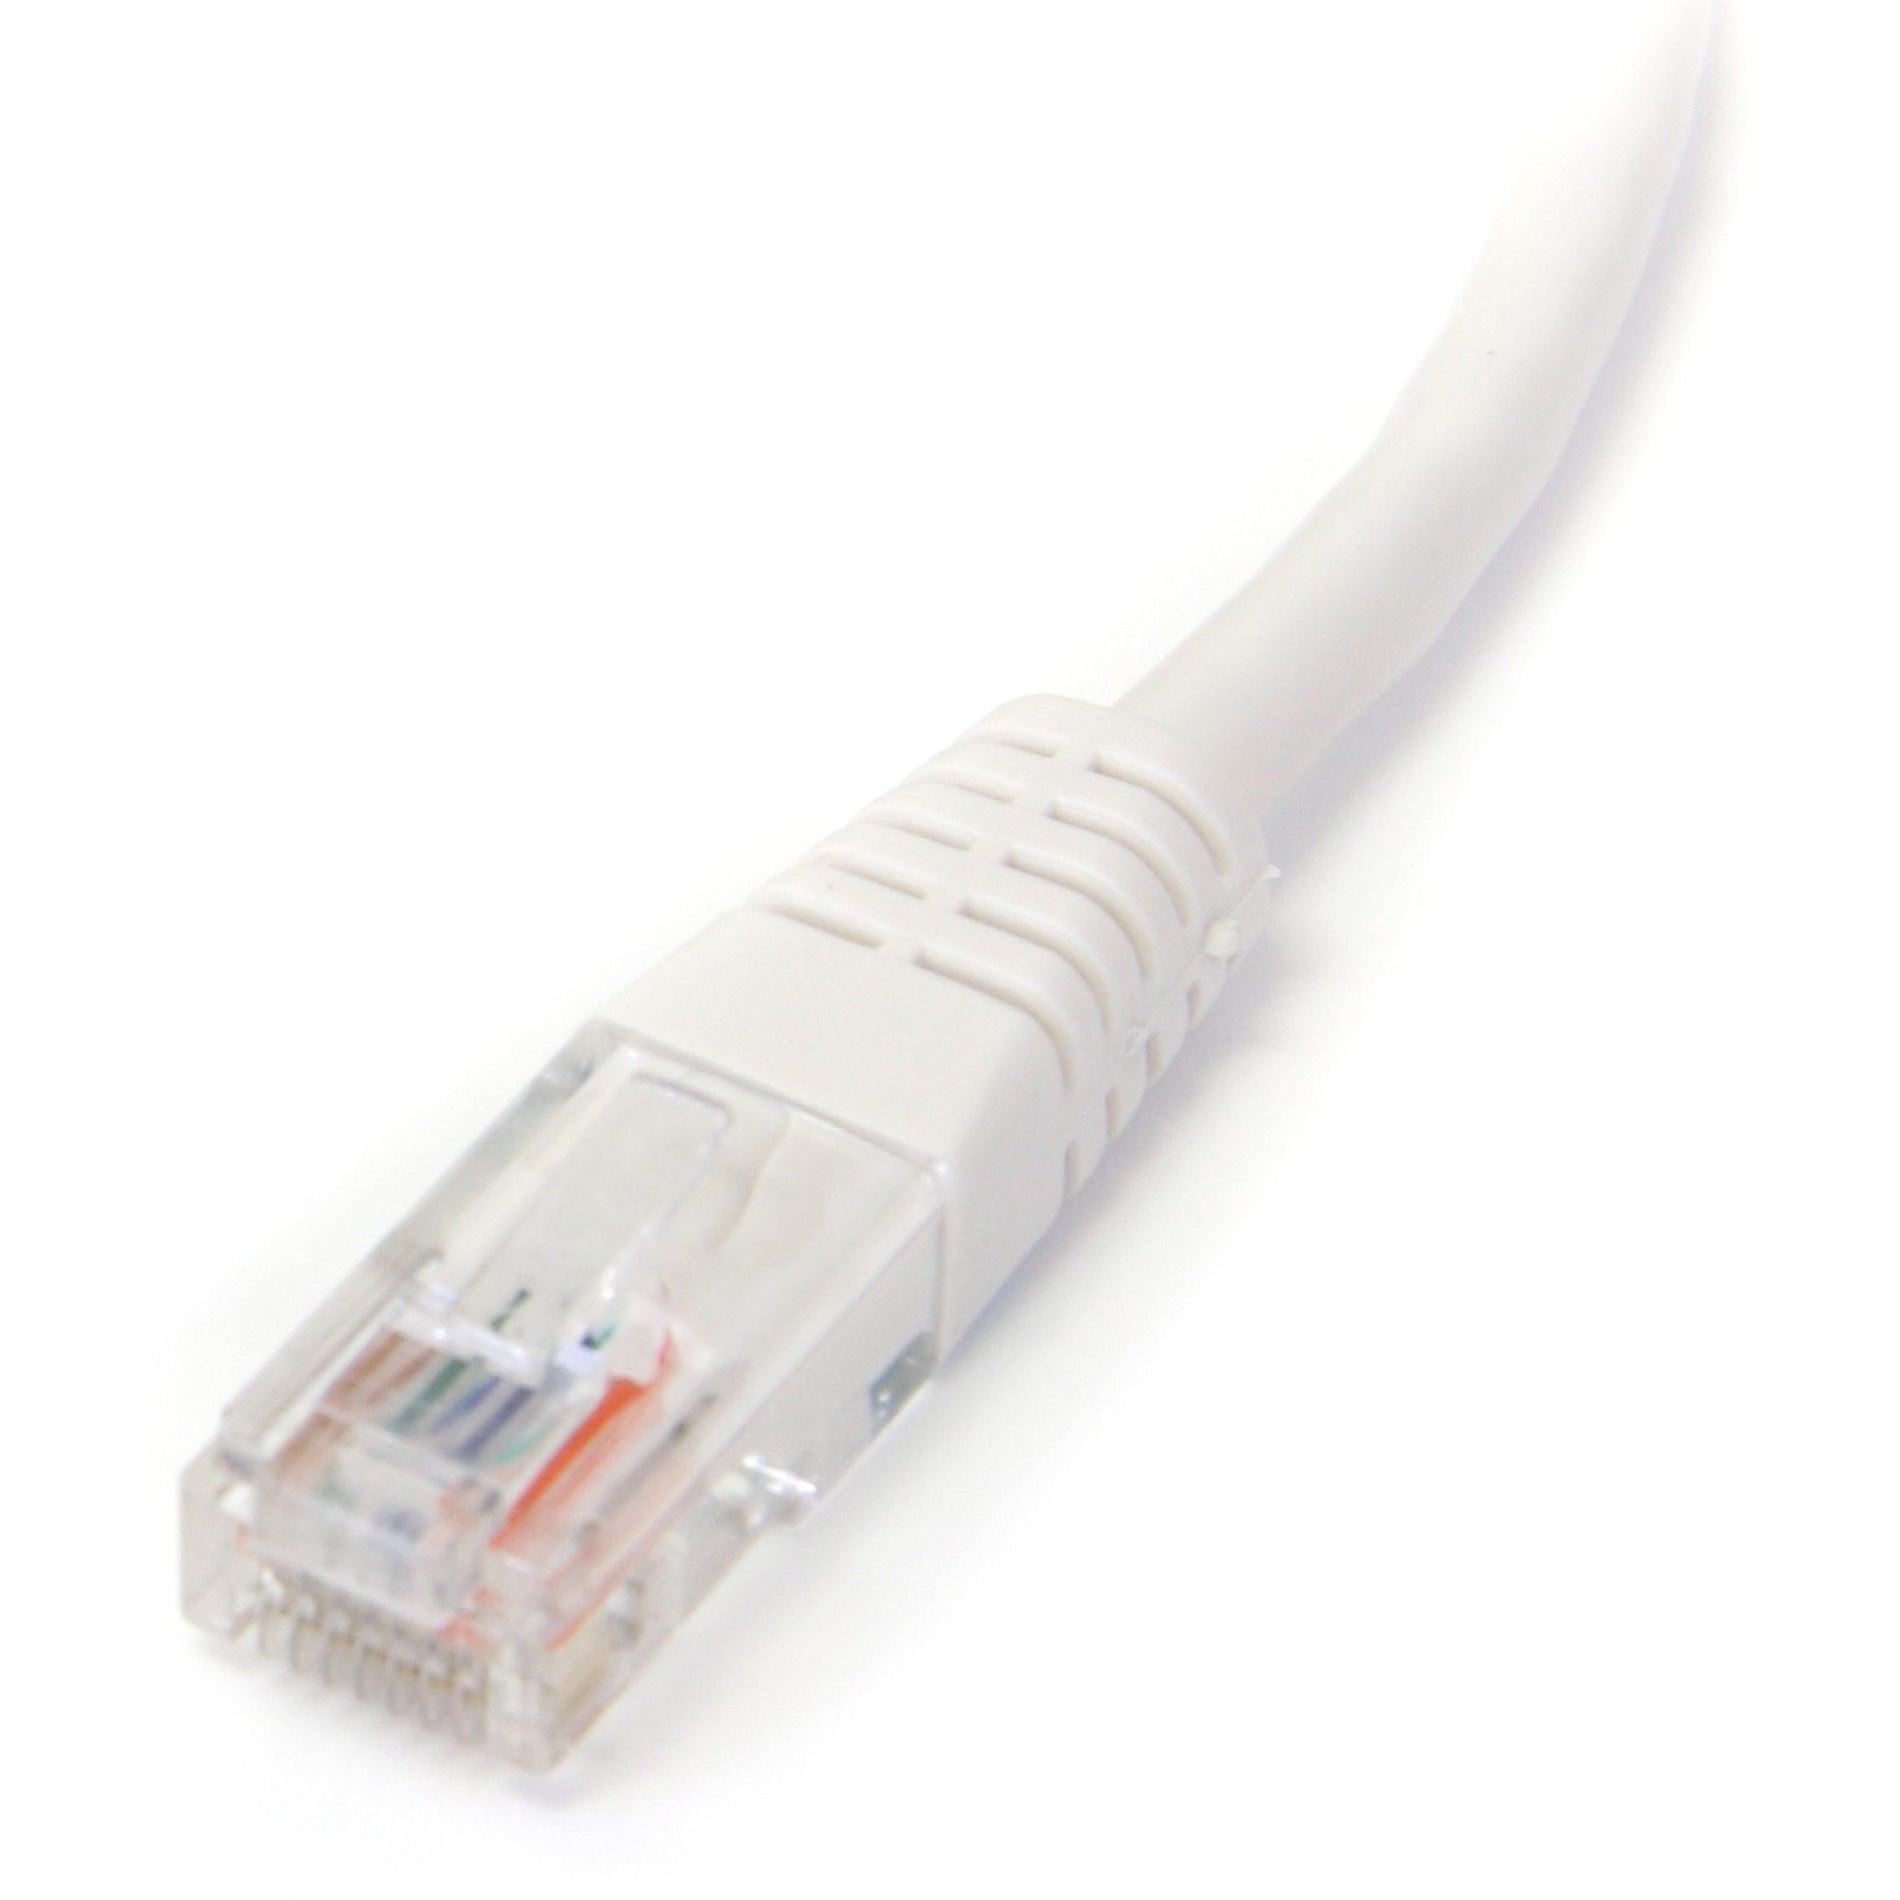 Marca: StarTech.com Cable de conexión CAT5e UTP moldeado blanco de 2 pies con conectores dorados alivio de tensión garantía de por vida.